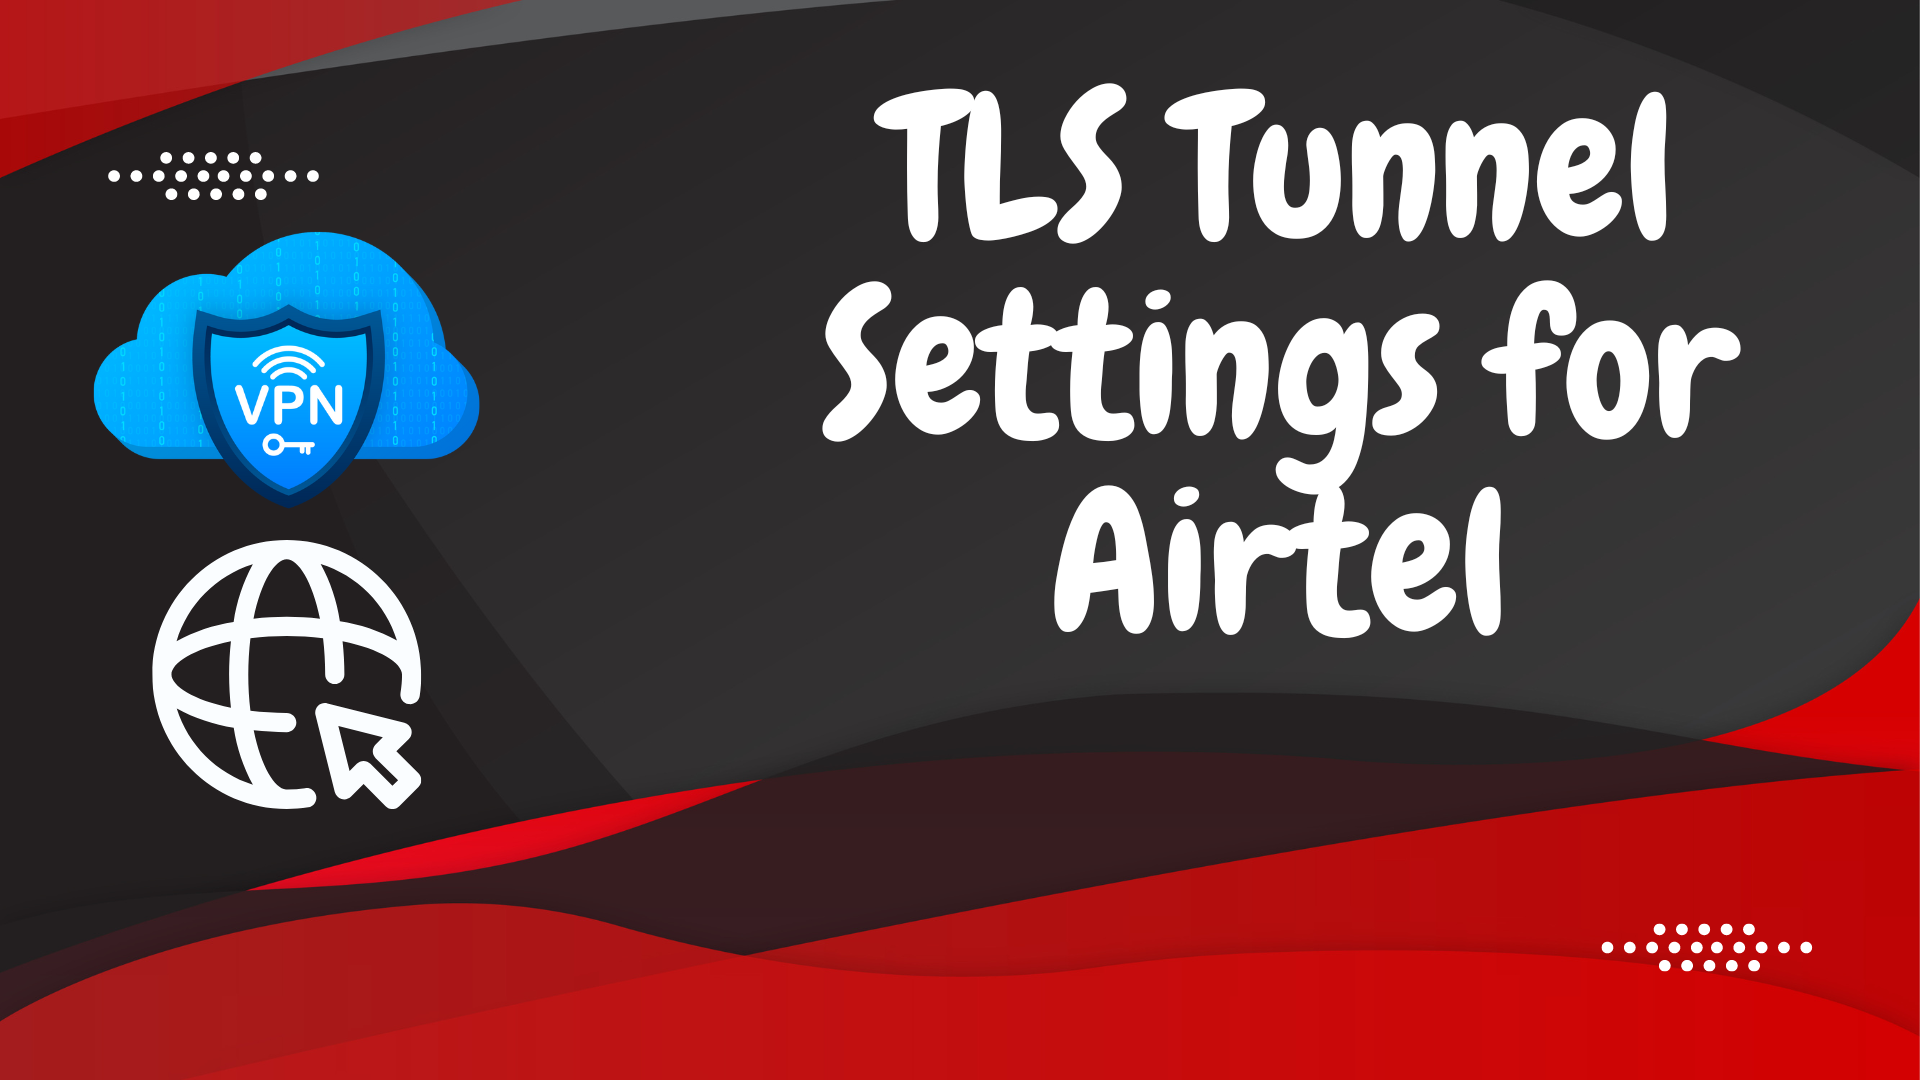 tls tunnel settings for airtel